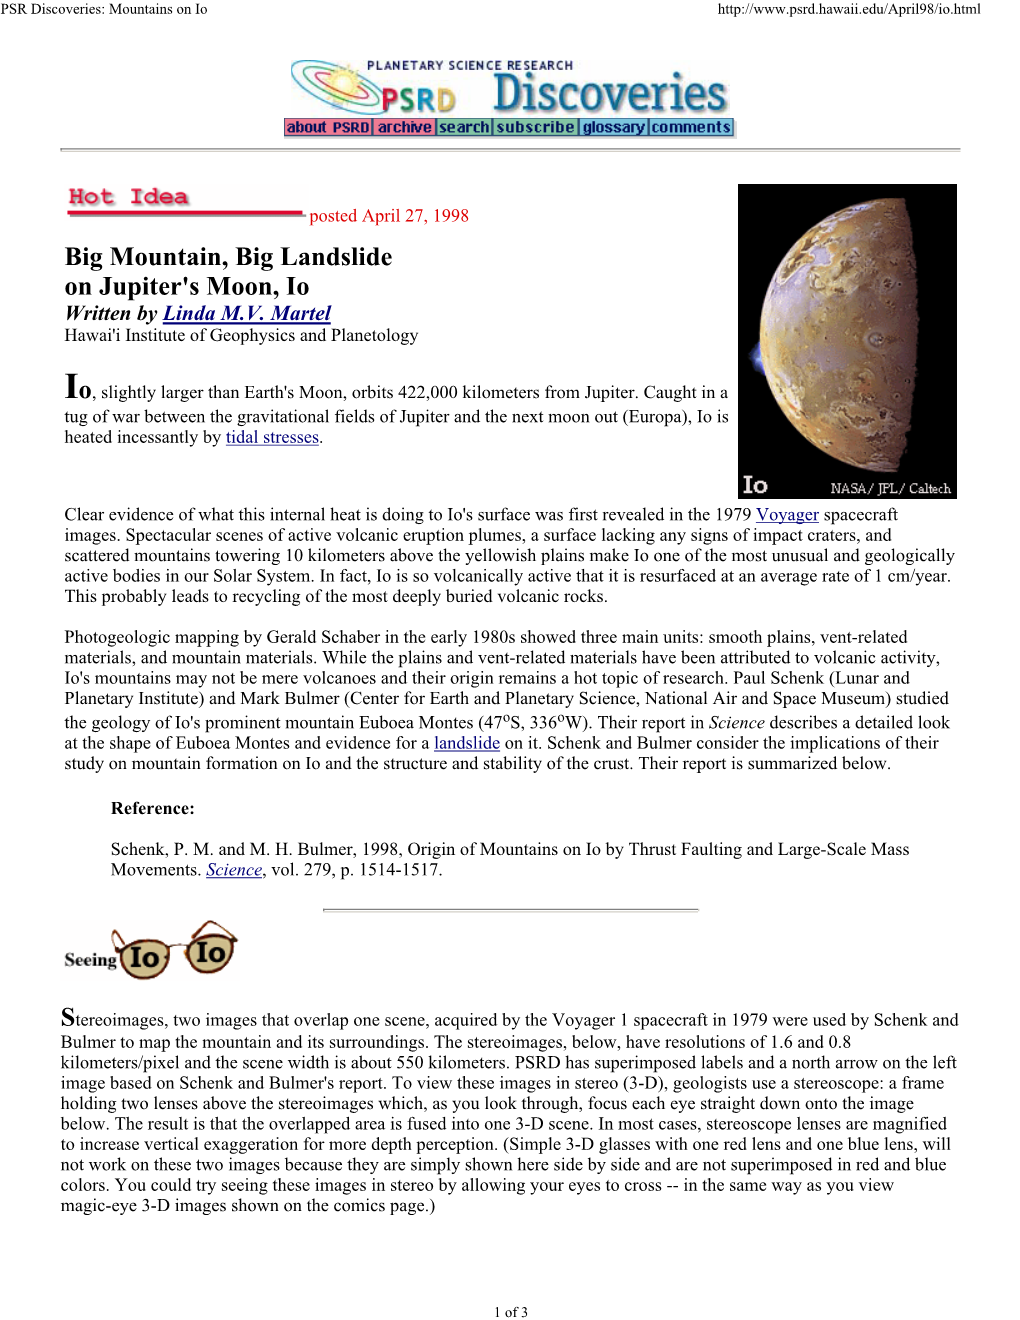 Big Mountain, Big Landslide on Jupiter's Moon, Io Written by Linda M.V